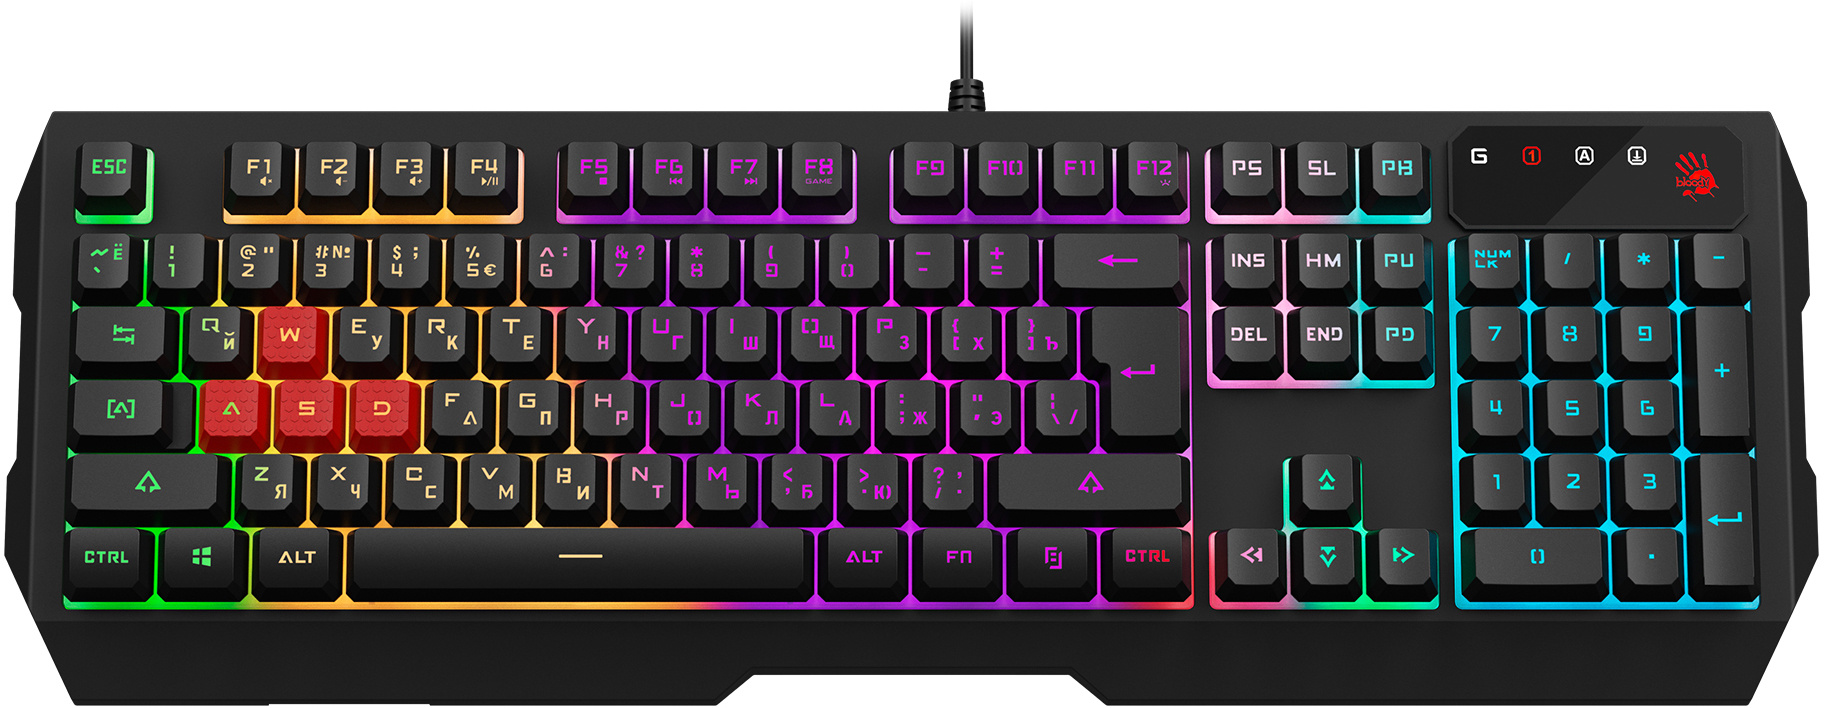 Клавиатура + мышь A4Tech Bloody B1700 клав:черный мышь:черный USB LED (B1700 ( B140N +ES7 + BP-50M))